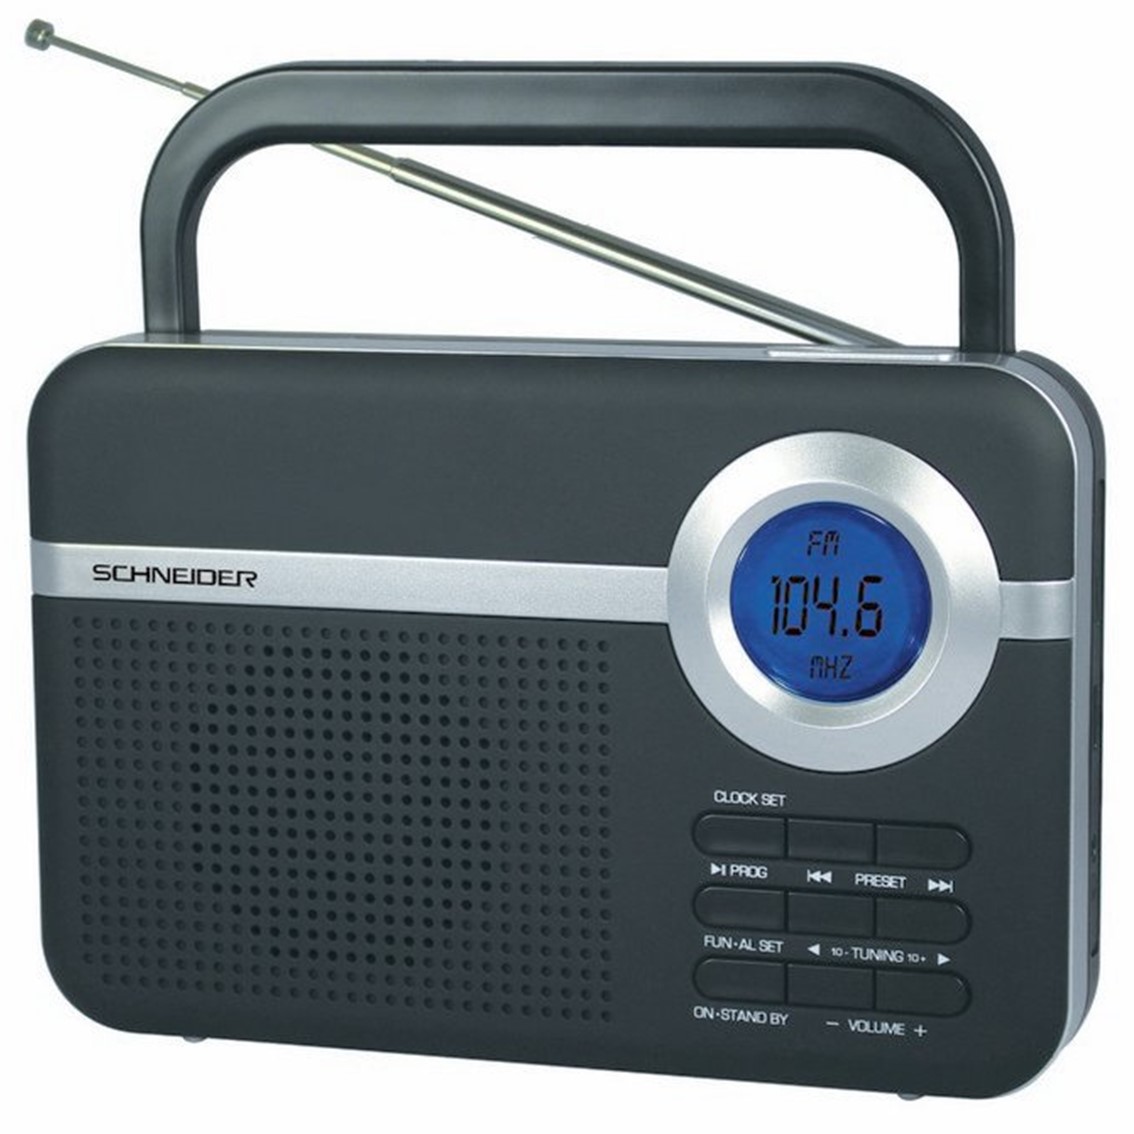 Radio digital schneider handy negro -  alarma